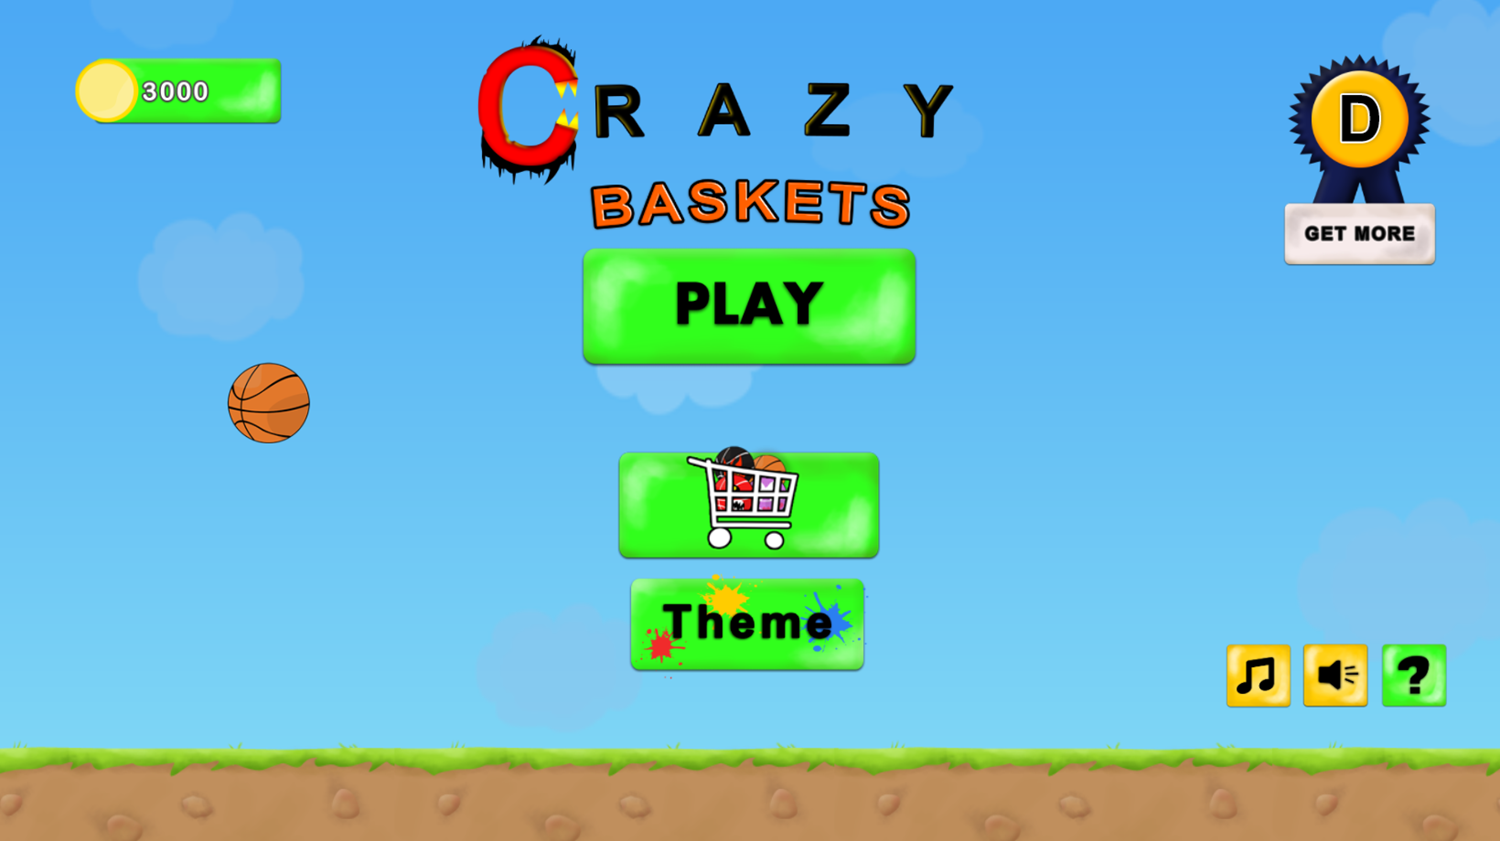 Crazy Baskets Game Welcome Screen Screenshot.